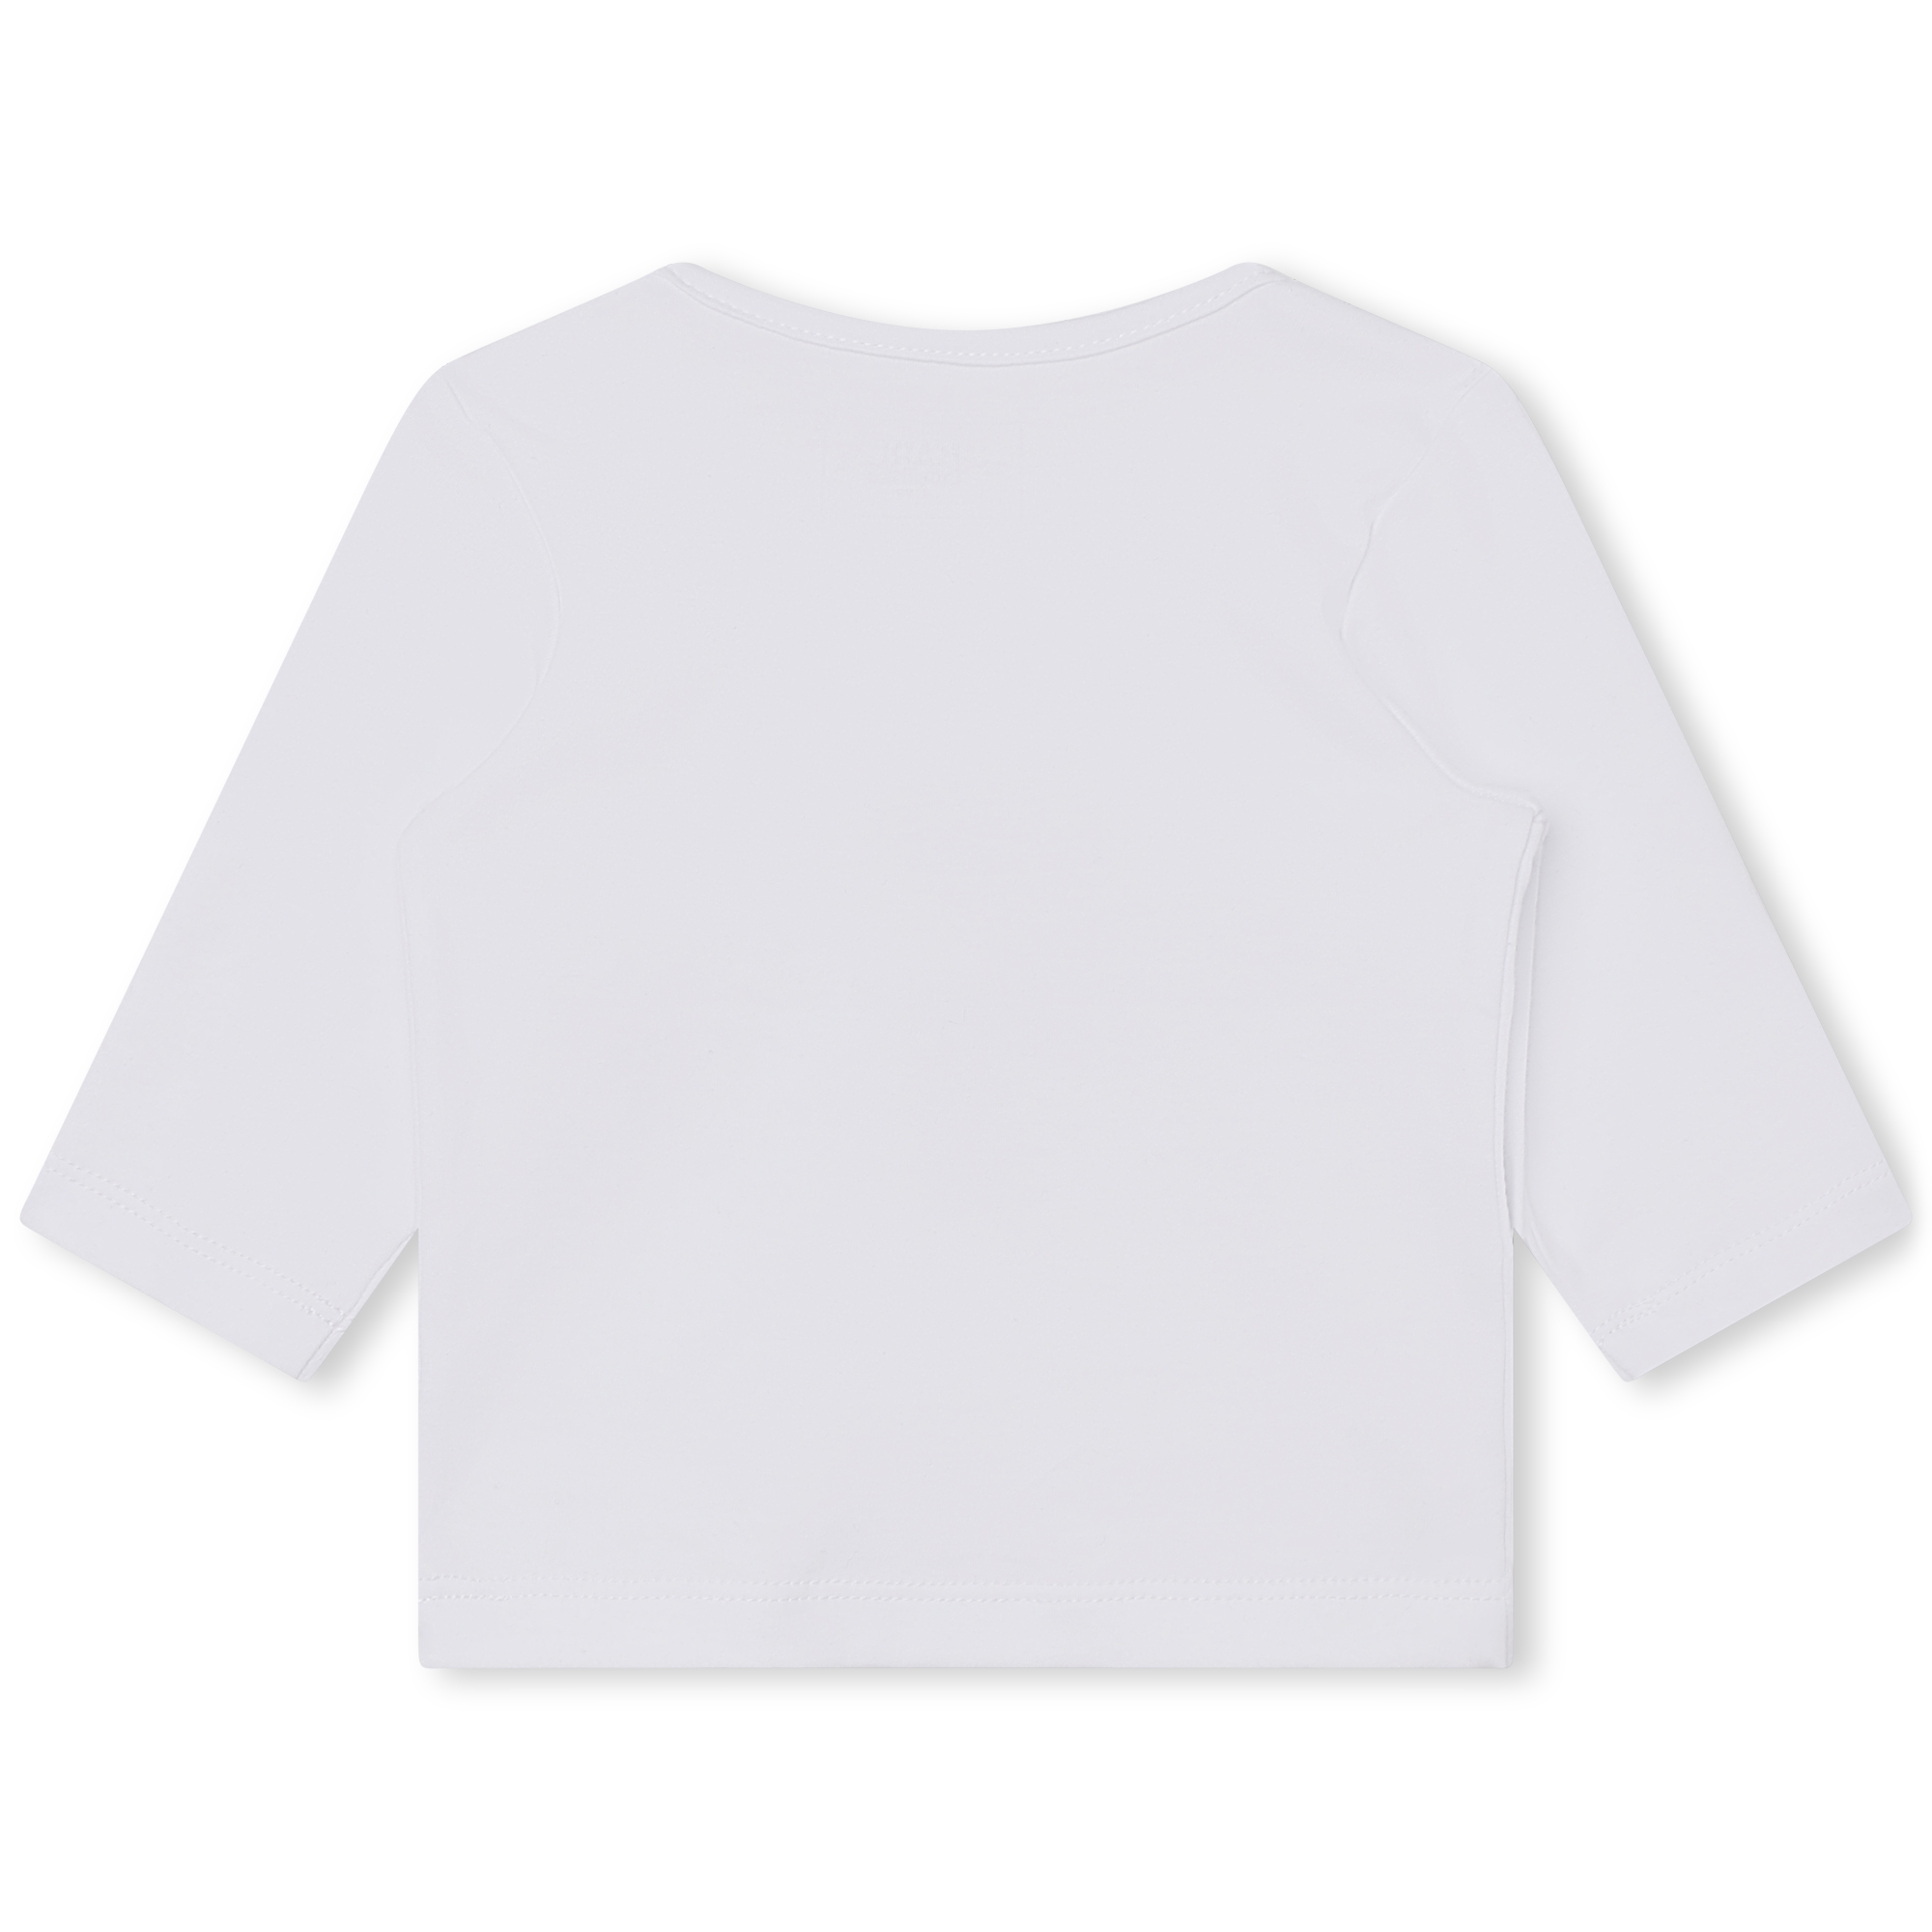 Completo t-shirt + legging KARL LAGERFELD KIDS Per RAGAZZO